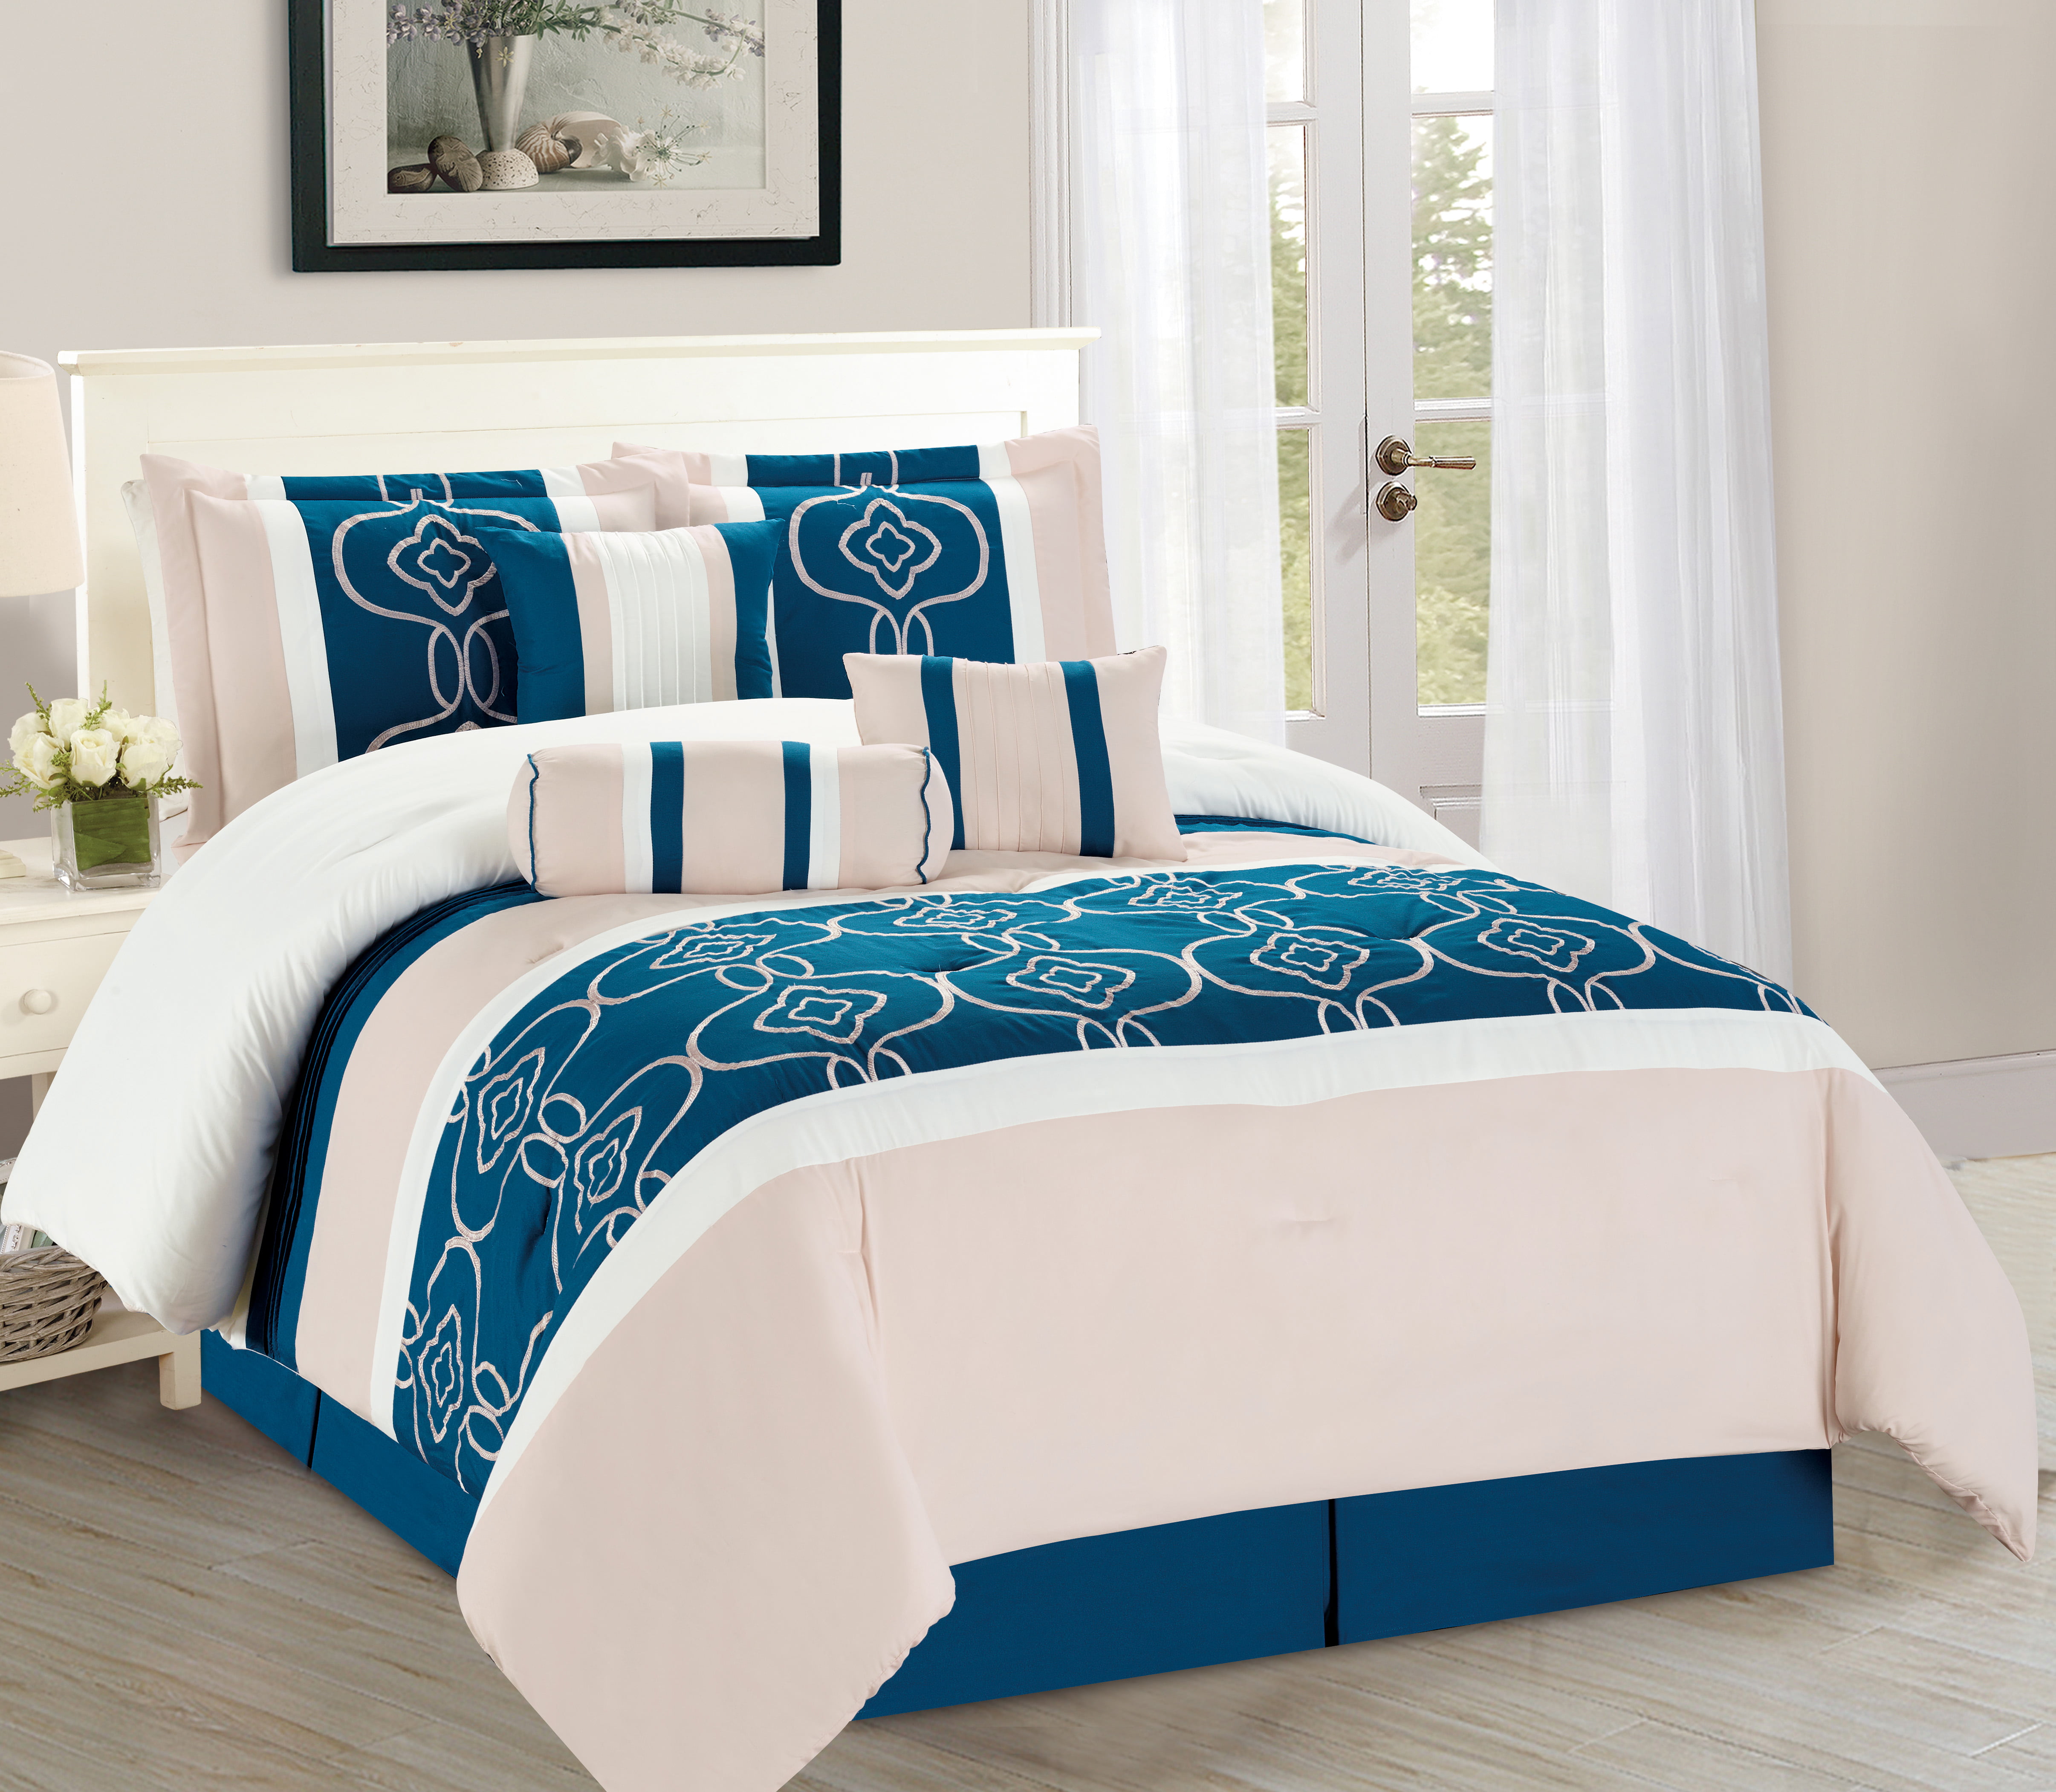 WPM 7 Pieces Complete Bedding Ensemble Turquoise Blue White Beige print